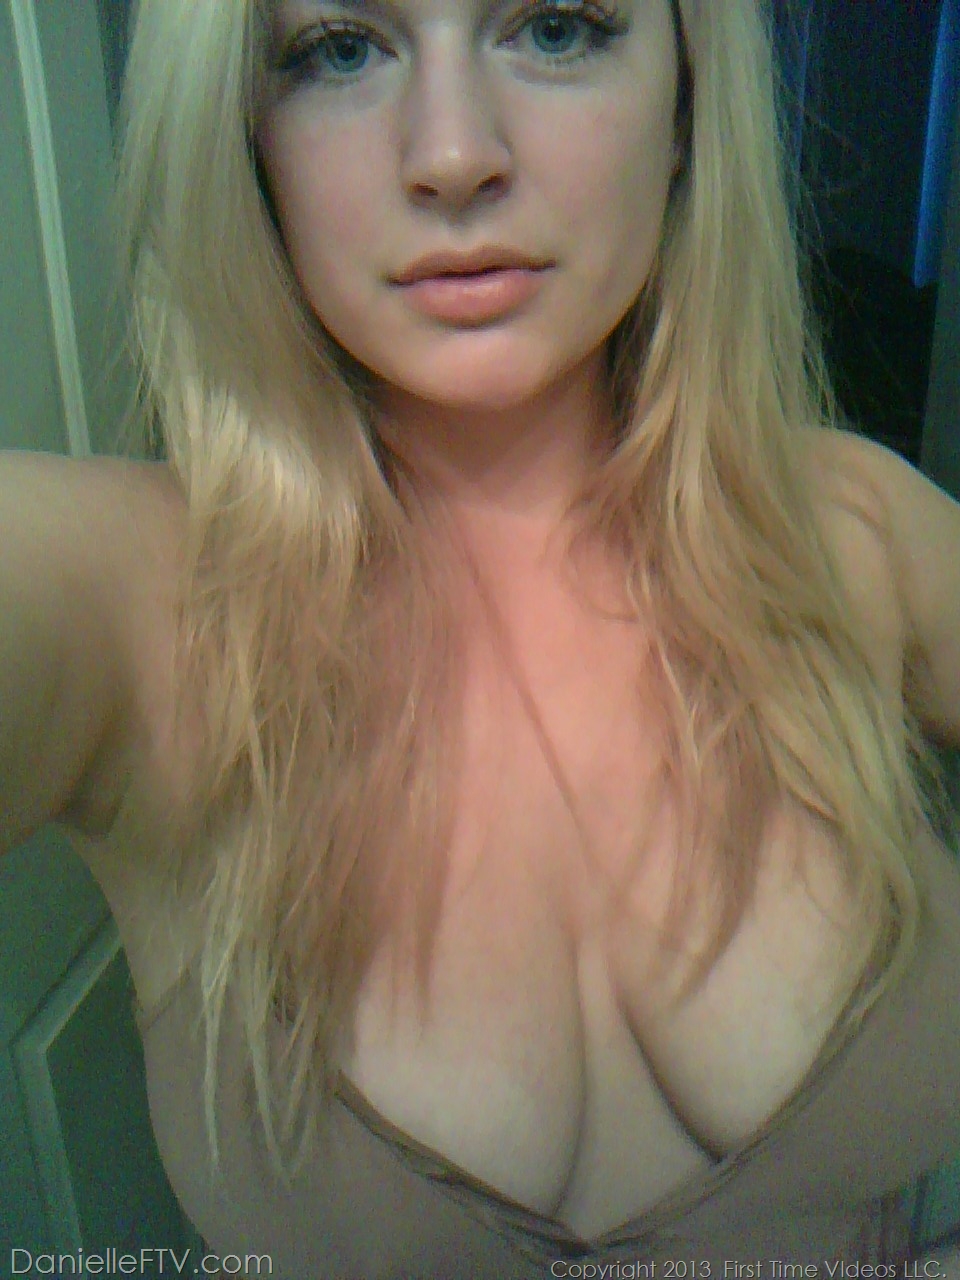 Blonde amateur Danielle Ftv dons numerous outfits for non nude selfies foto porno #422634186